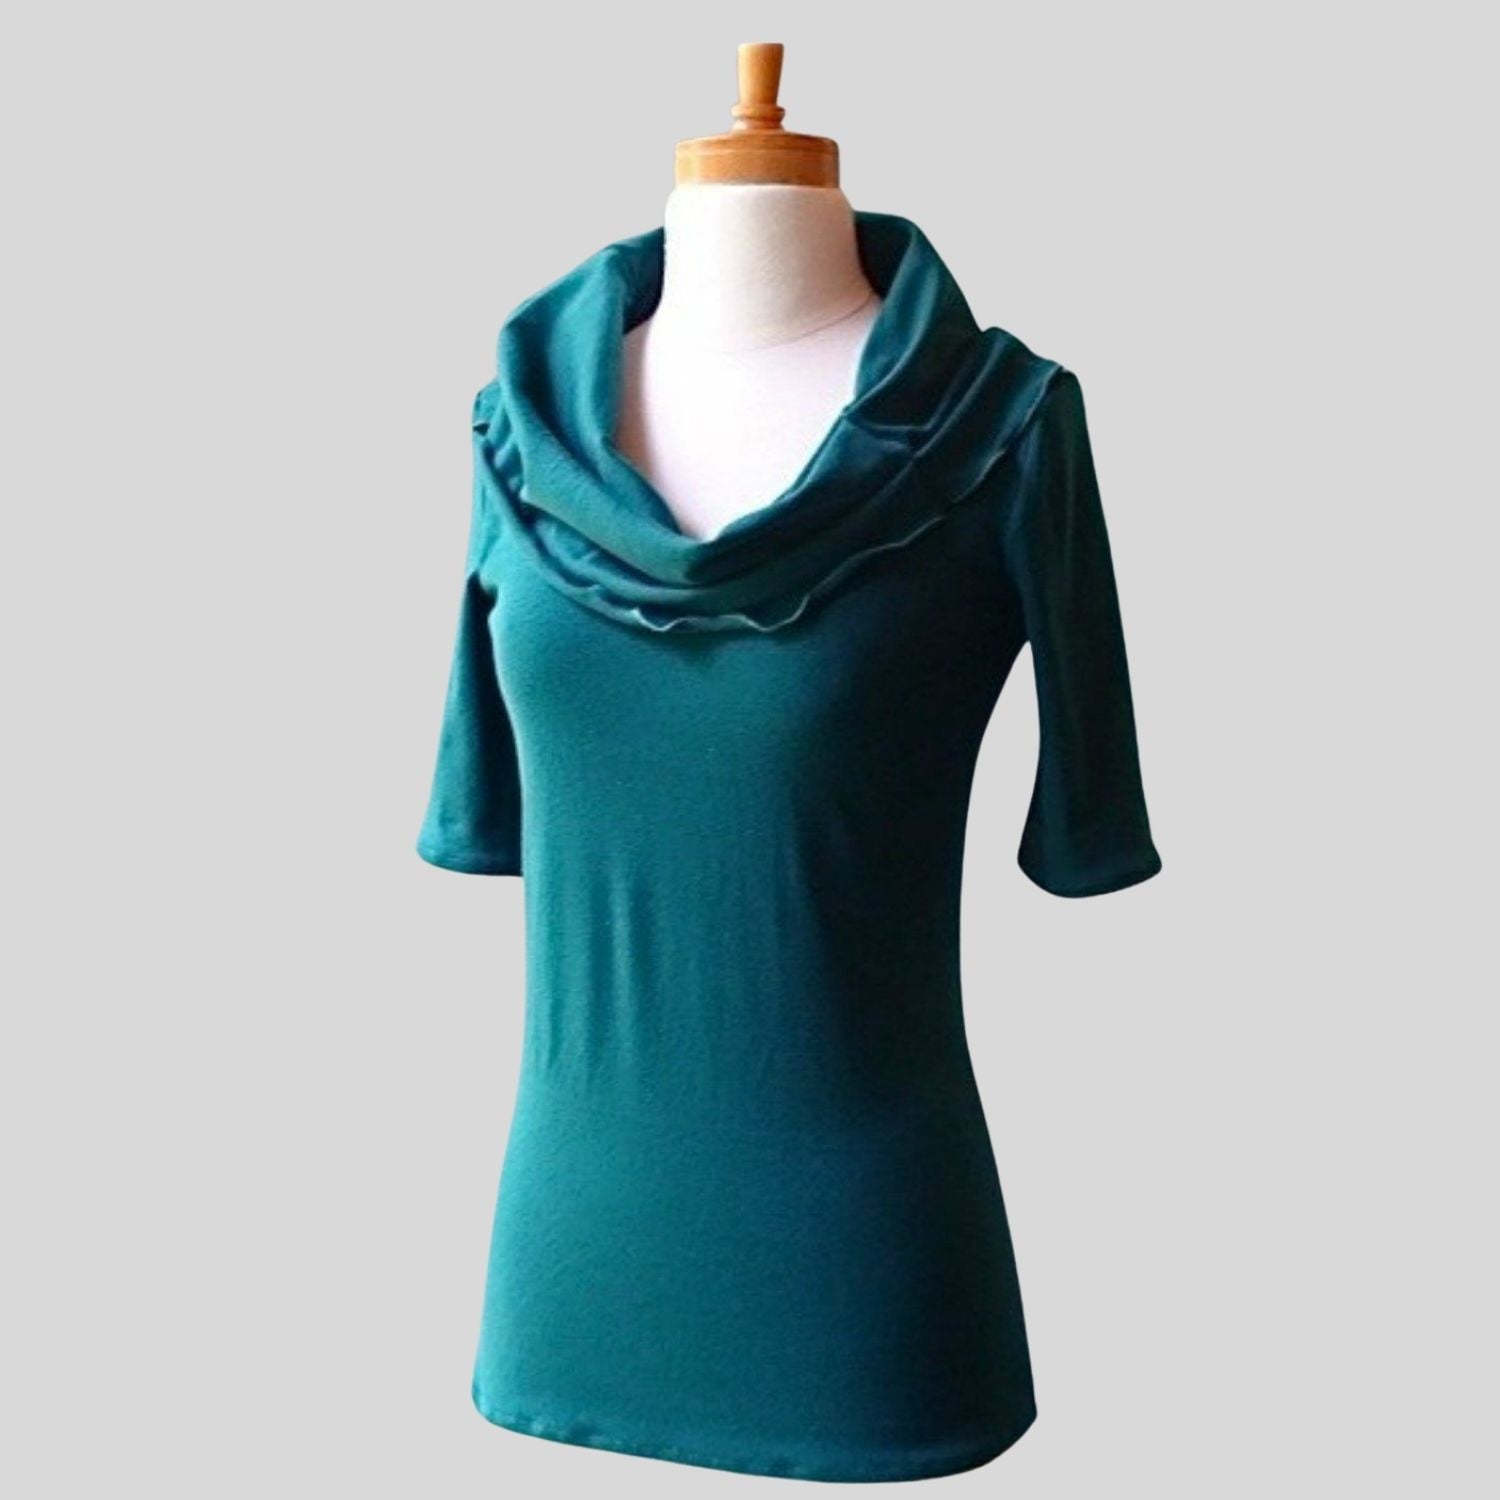 Buy Teal Green Organic cotton women's sweater top | Shop women's clothing from Canada